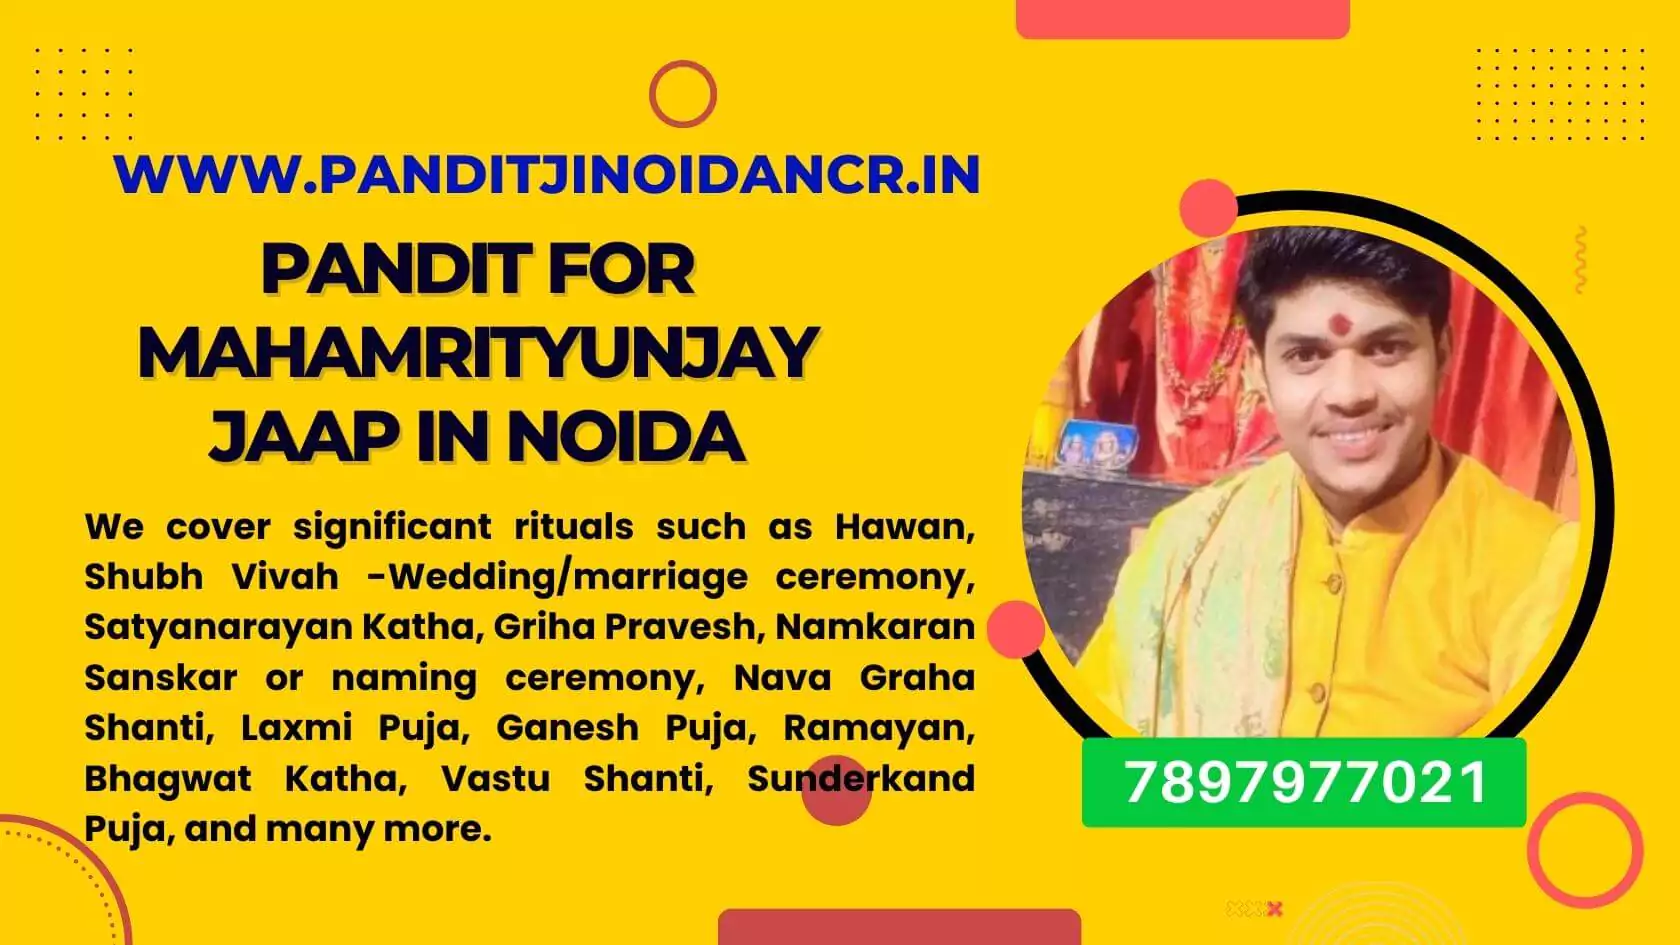 Pandit for Mahamrityunjay jaap in Noida